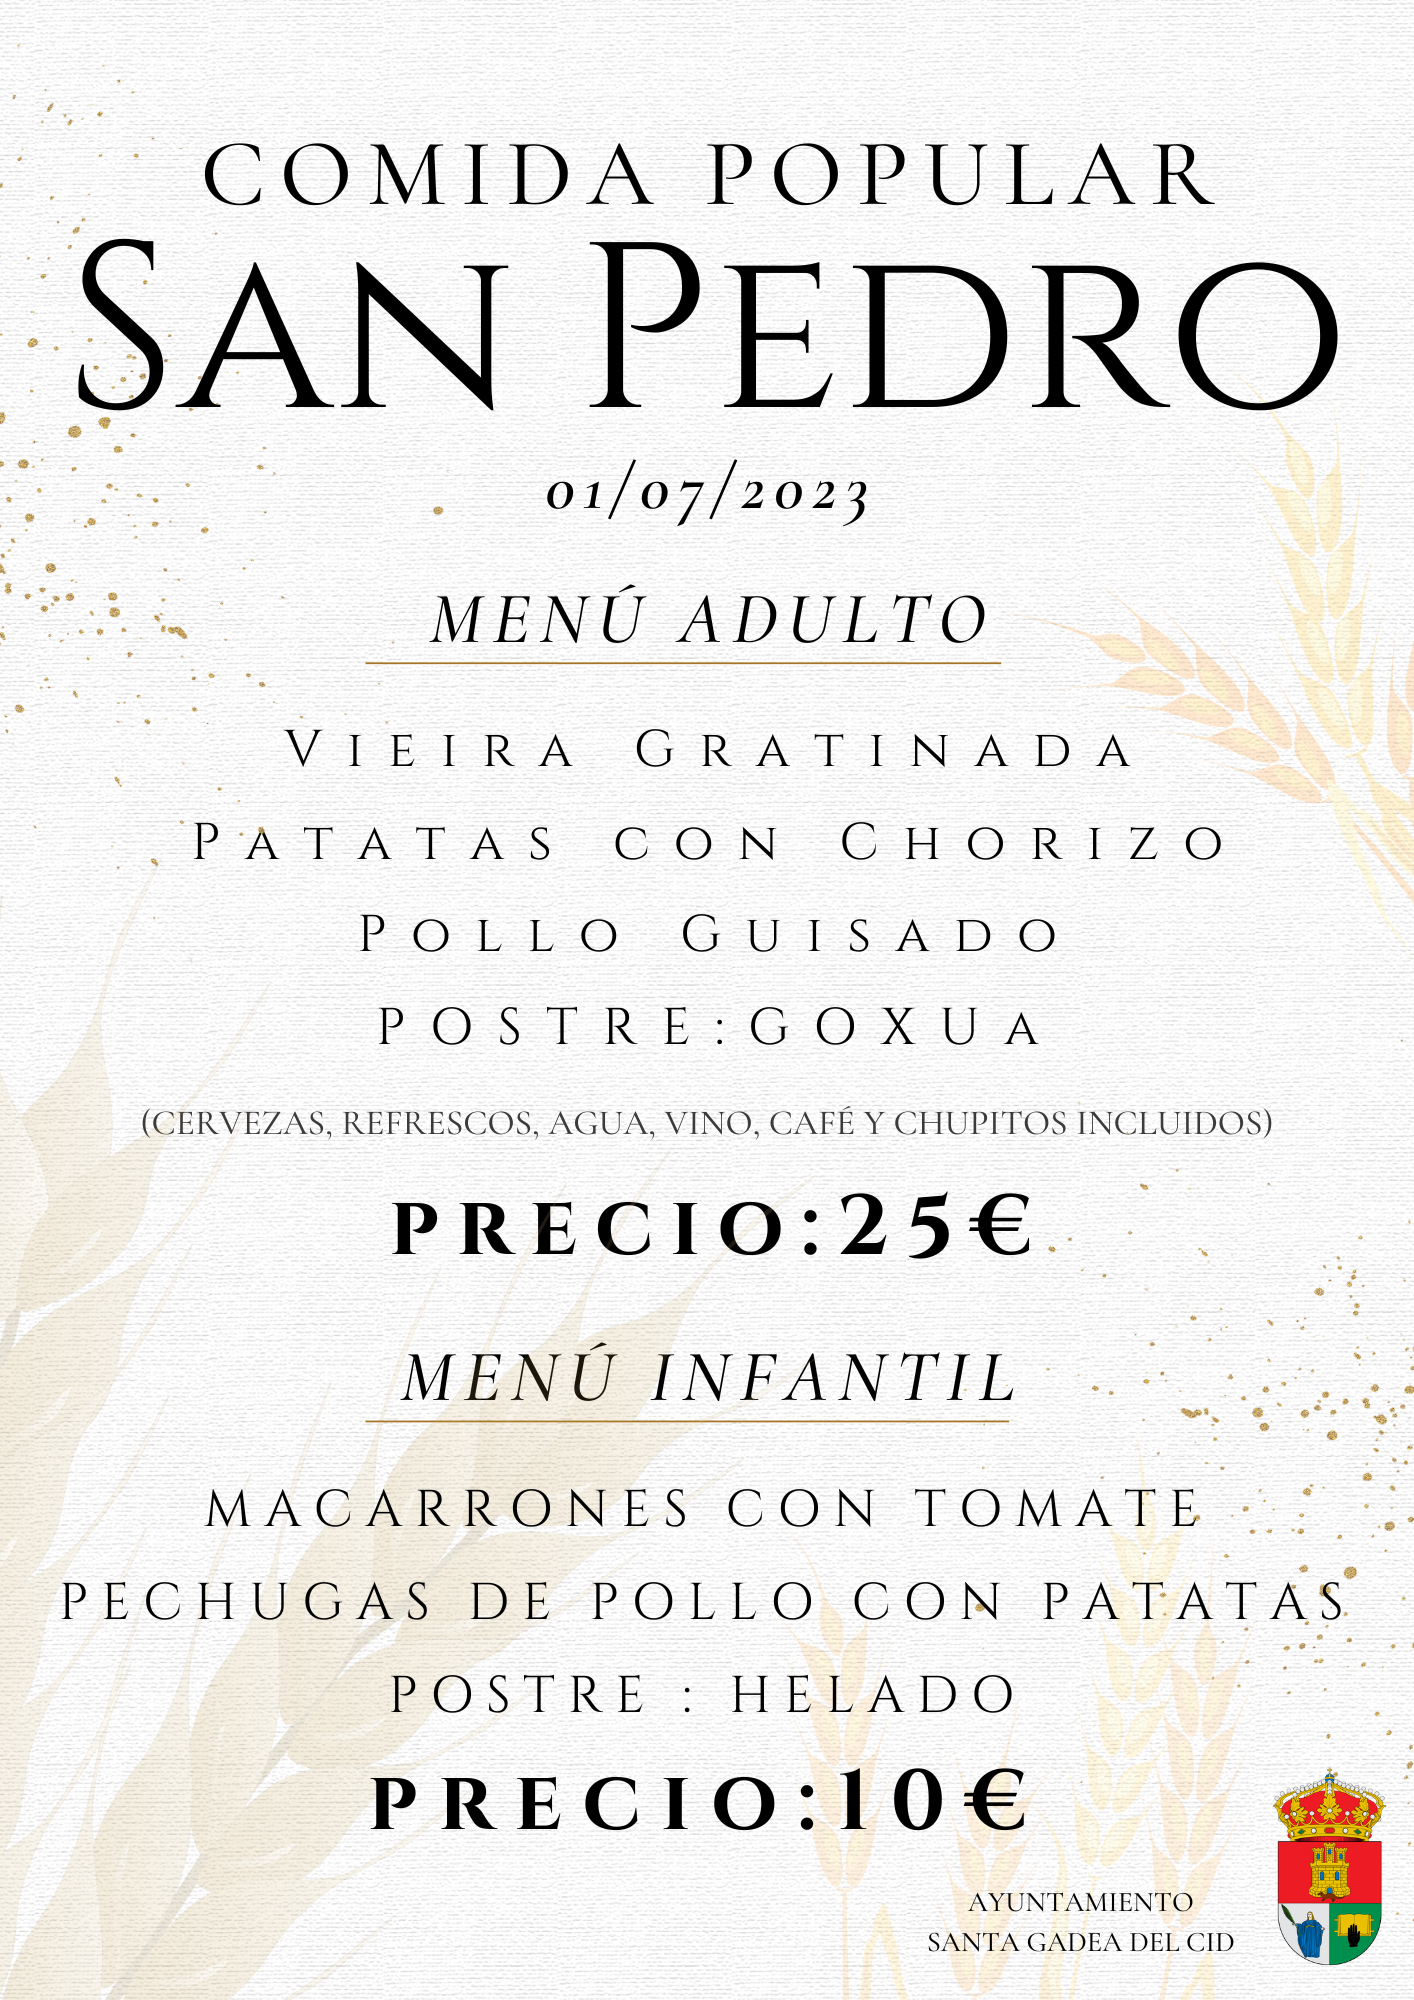 Comida Popular San Pedro 2023